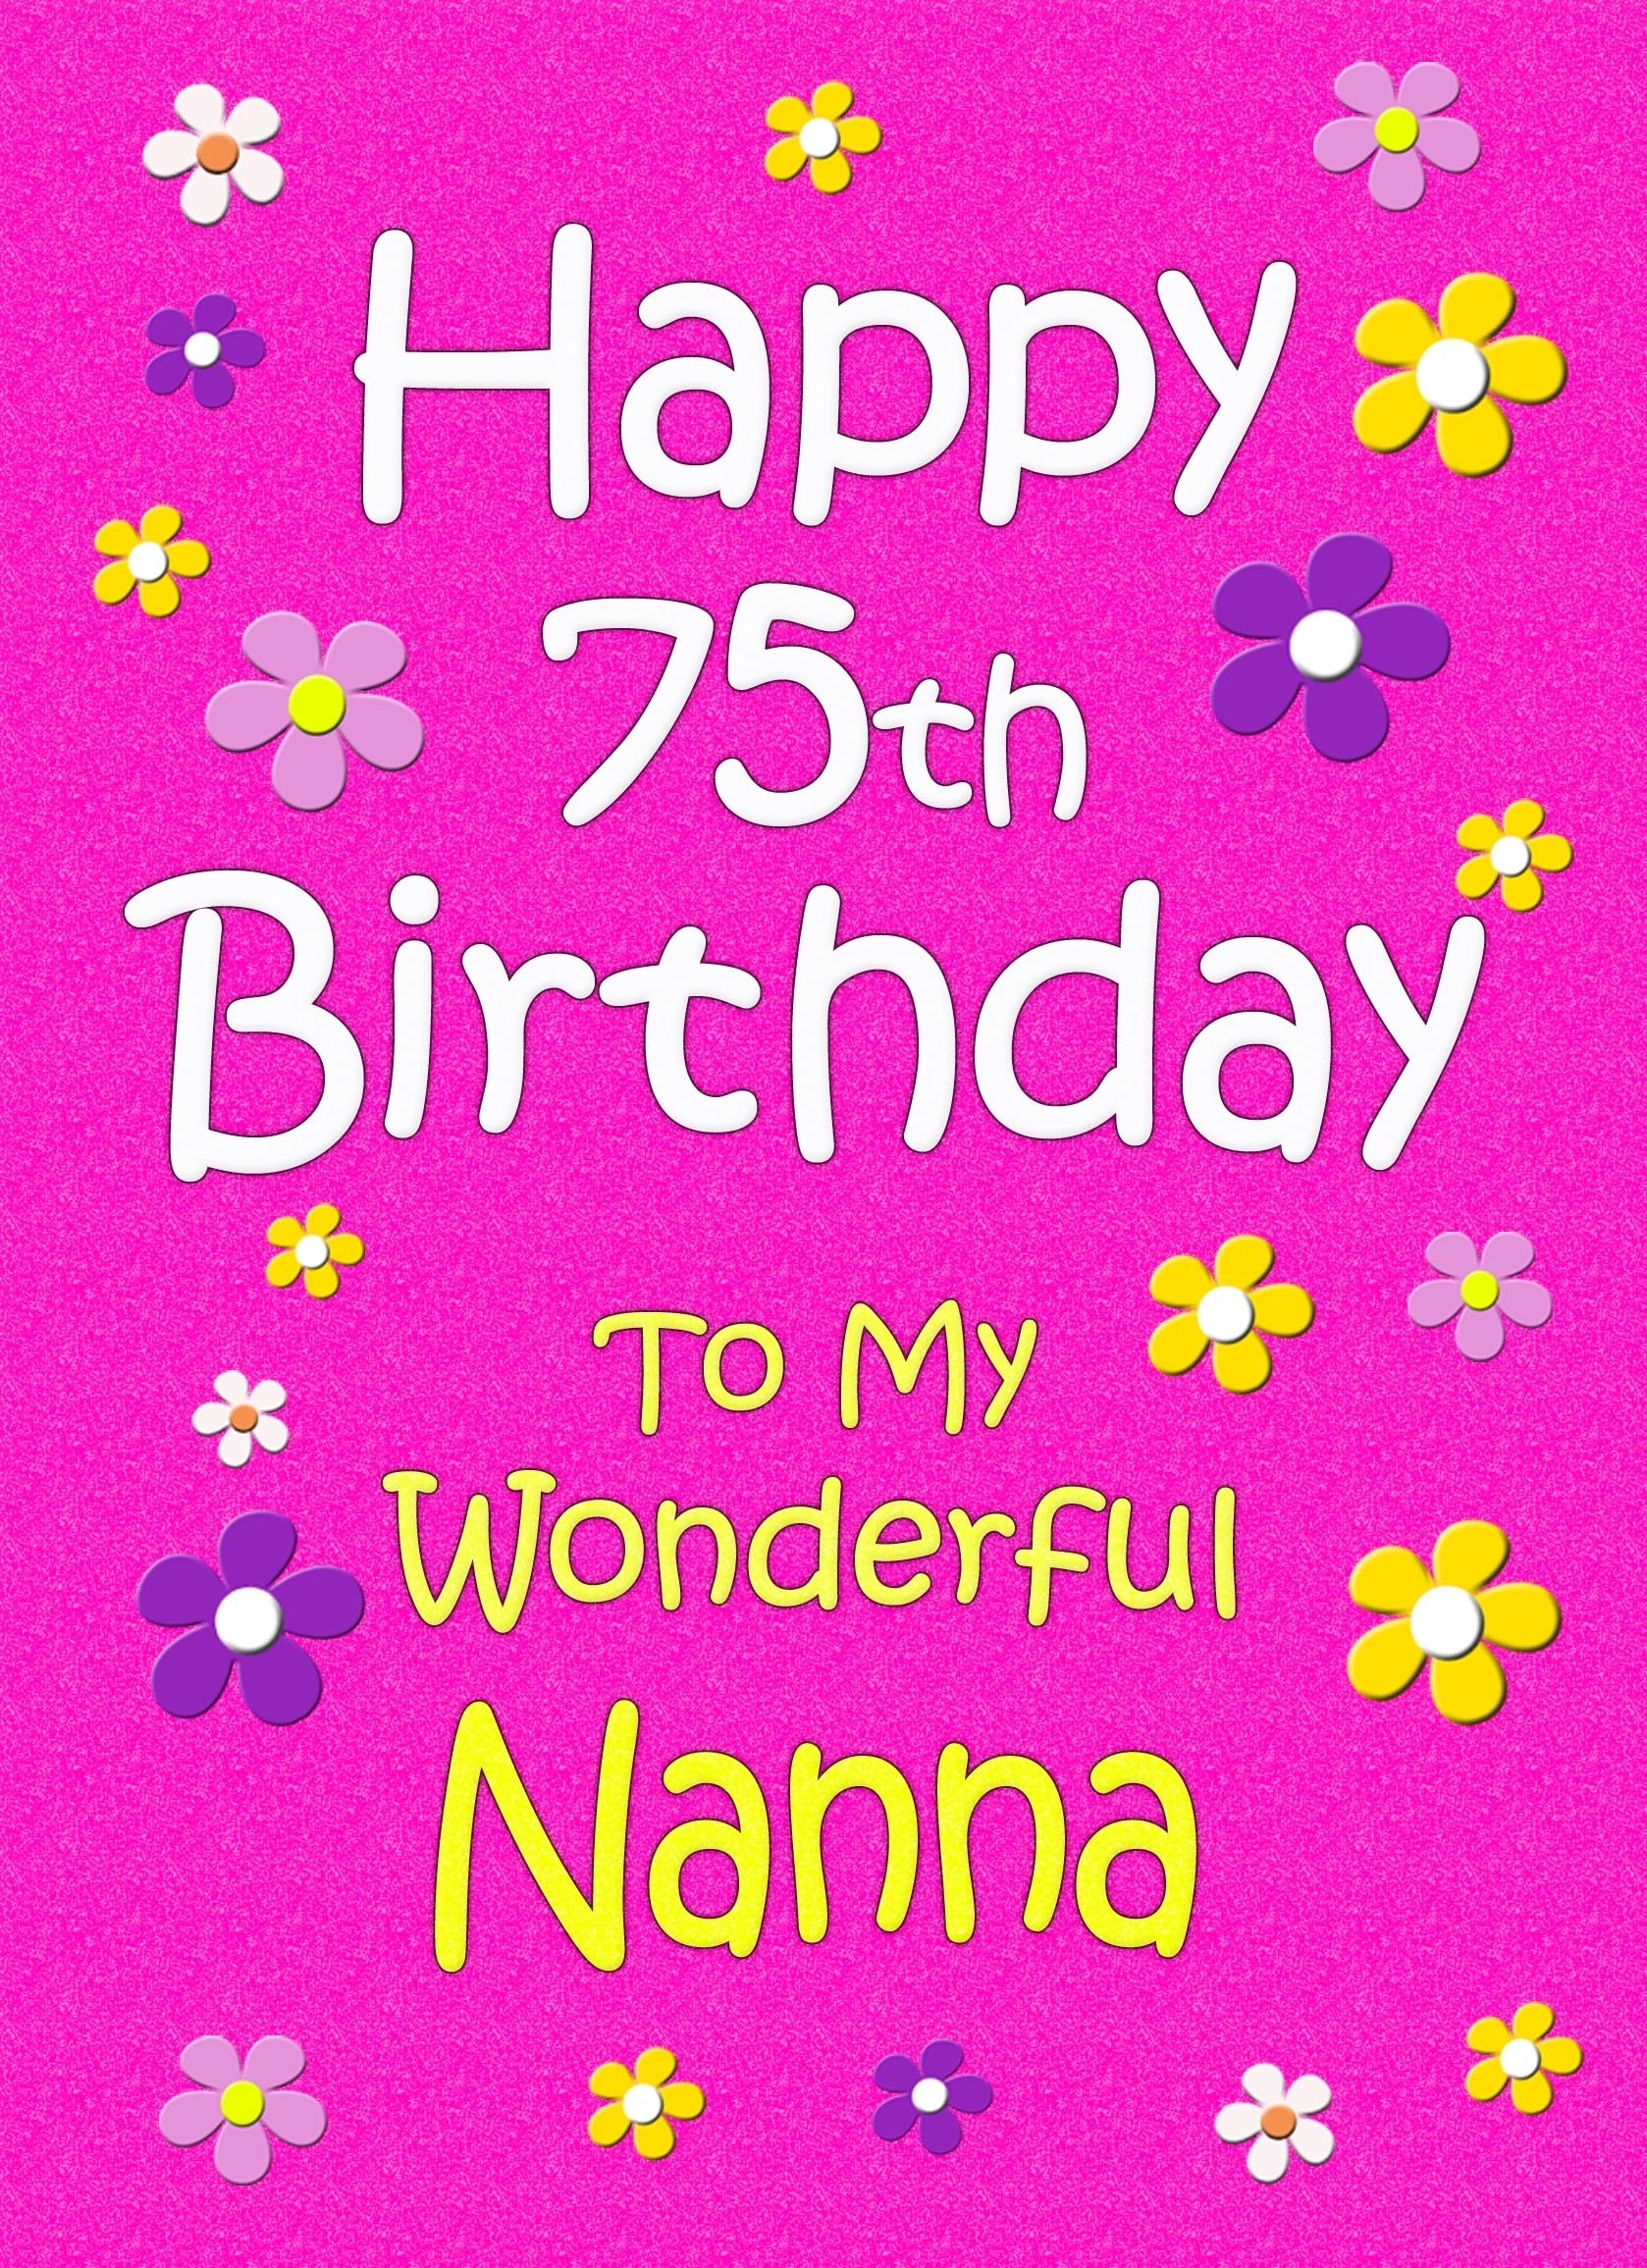 Nanna 75th Birthday Card (Pink)